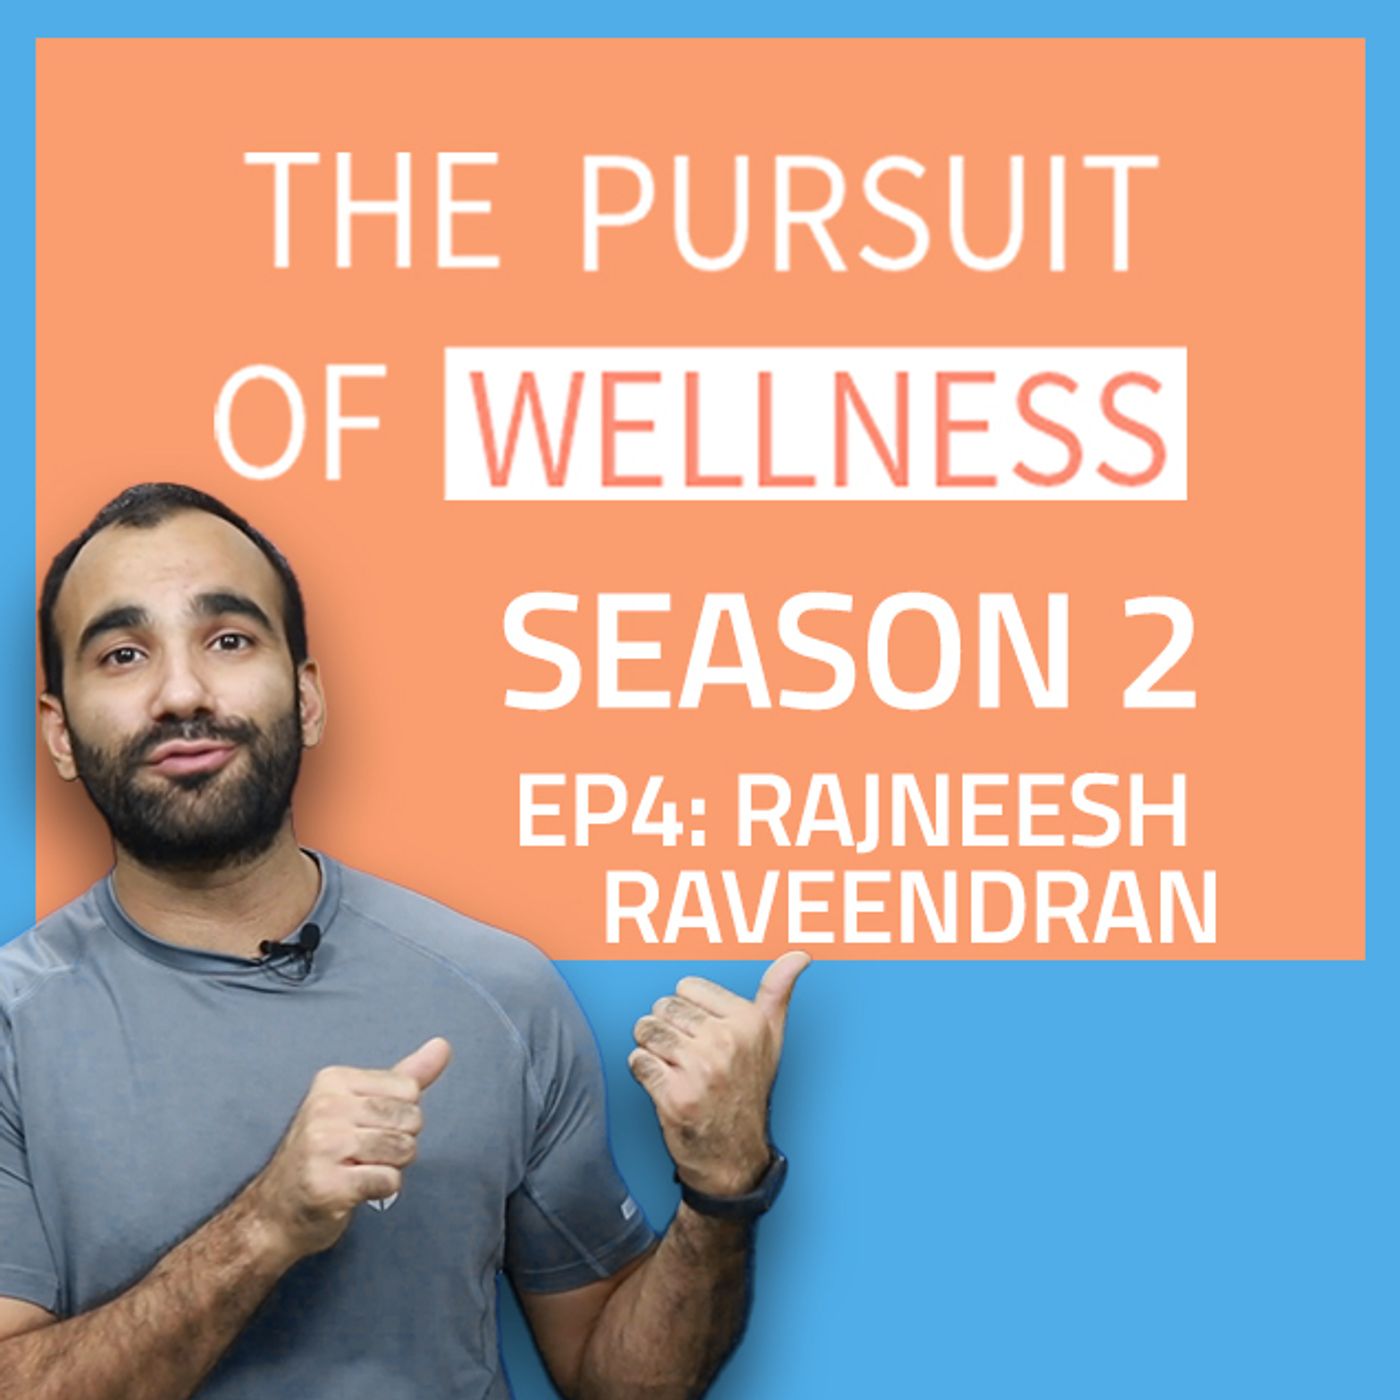 S2 Ep4: "Boxing and Wellness" with Rajneesh Raveendran